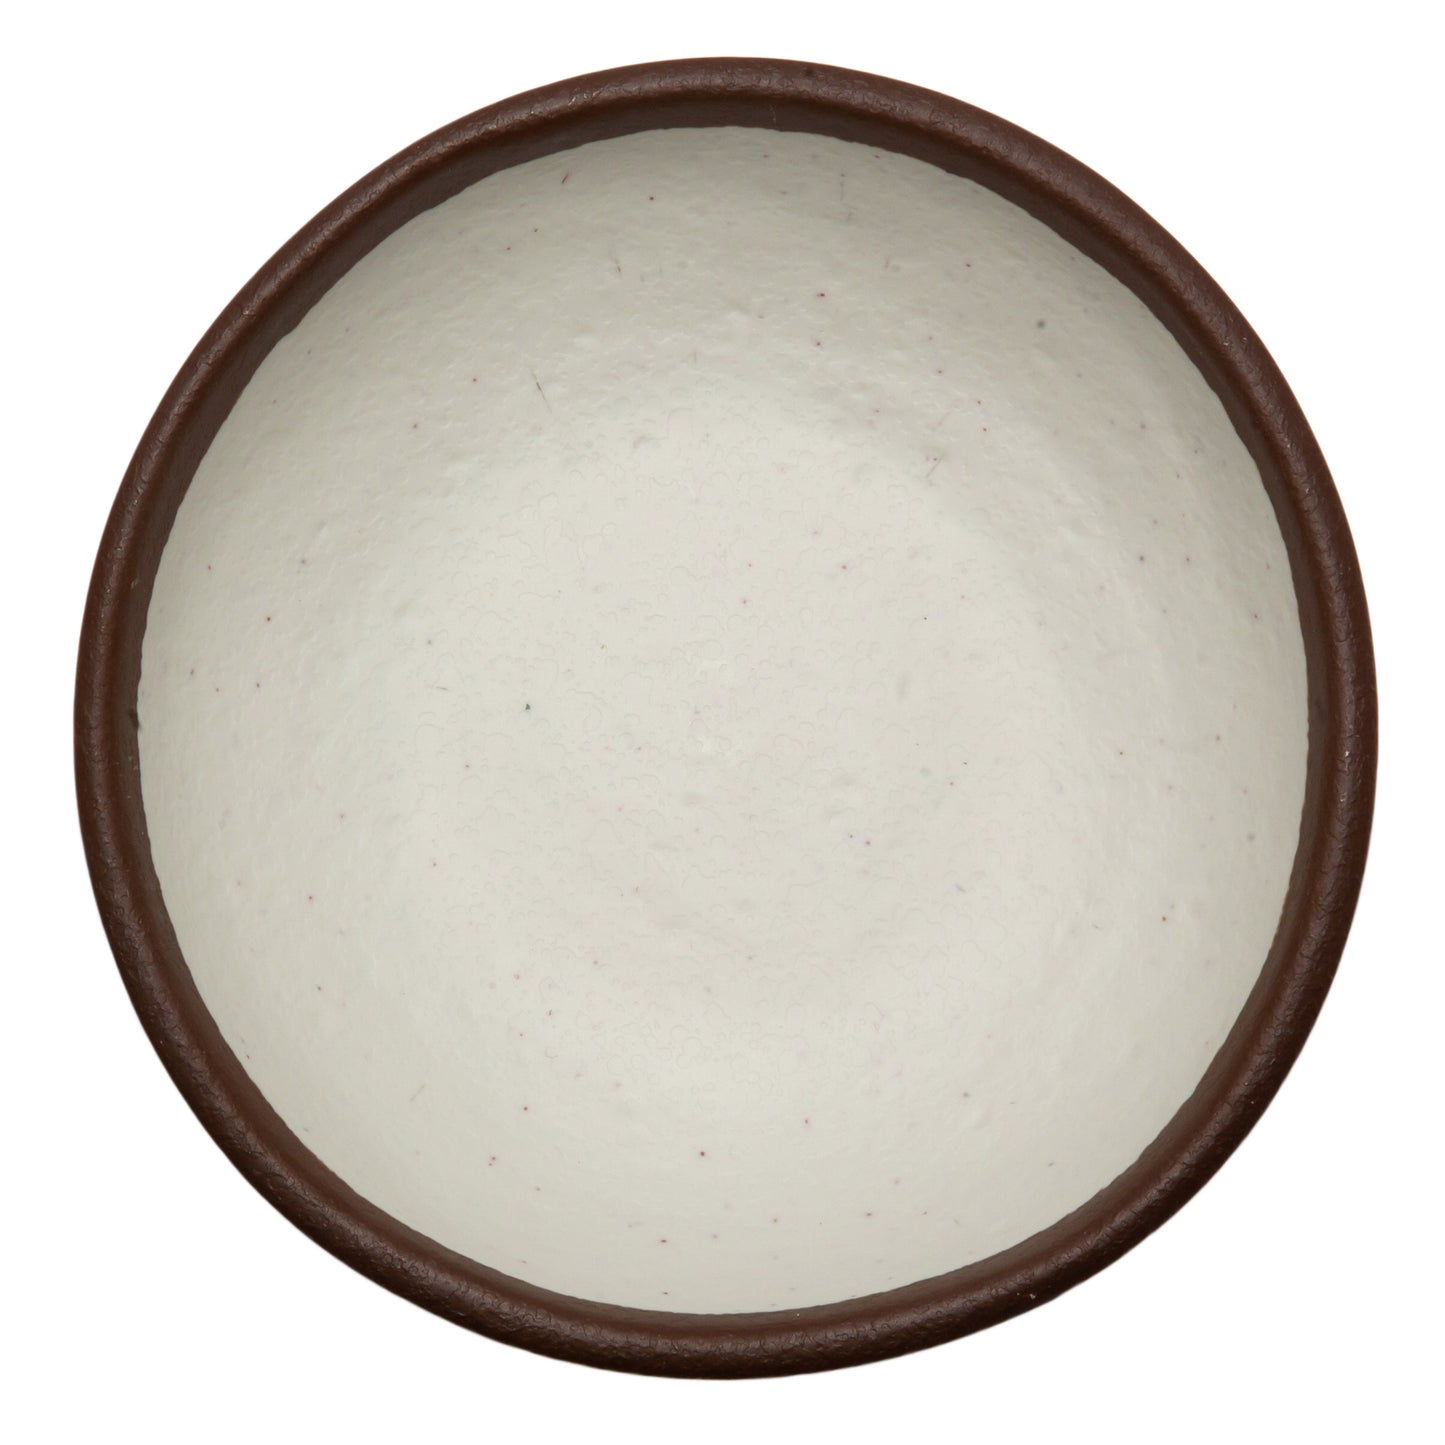 4.5 oz. Cream, Melamine, Ramekin, Small Round Monkey Dish Bowl, (5 oz. rim-full), 4.5" Top Dia., 1" Deep, G.E.T. Pottery Market Glazed (12 Pack)